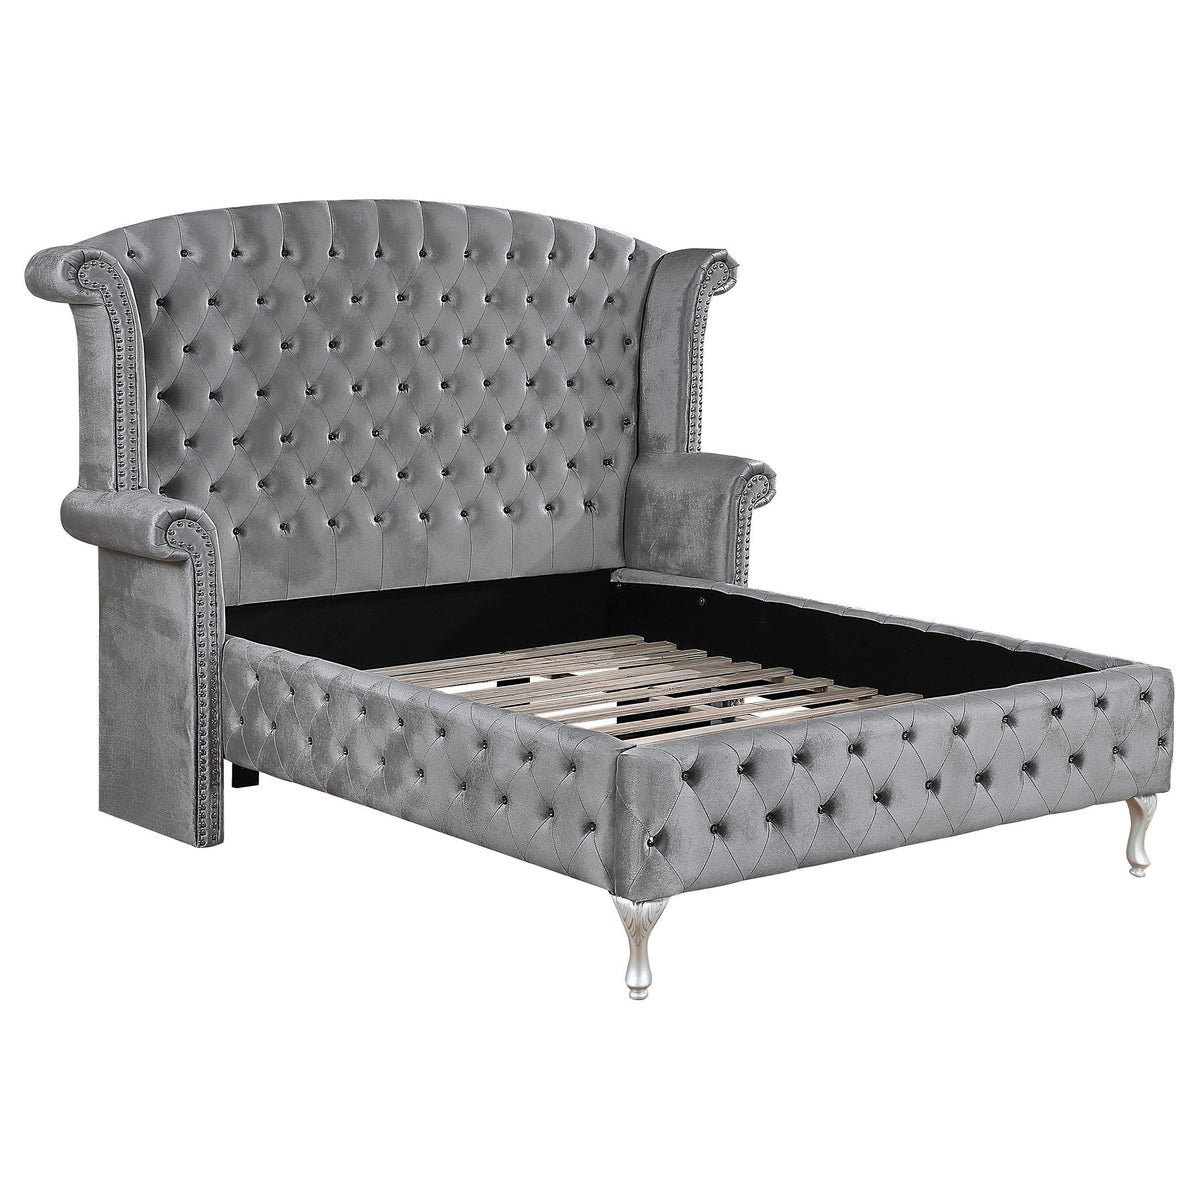 Deanna Eastern King Tufted Upholstered Bed Grey  Las Vegas Furniture Stores